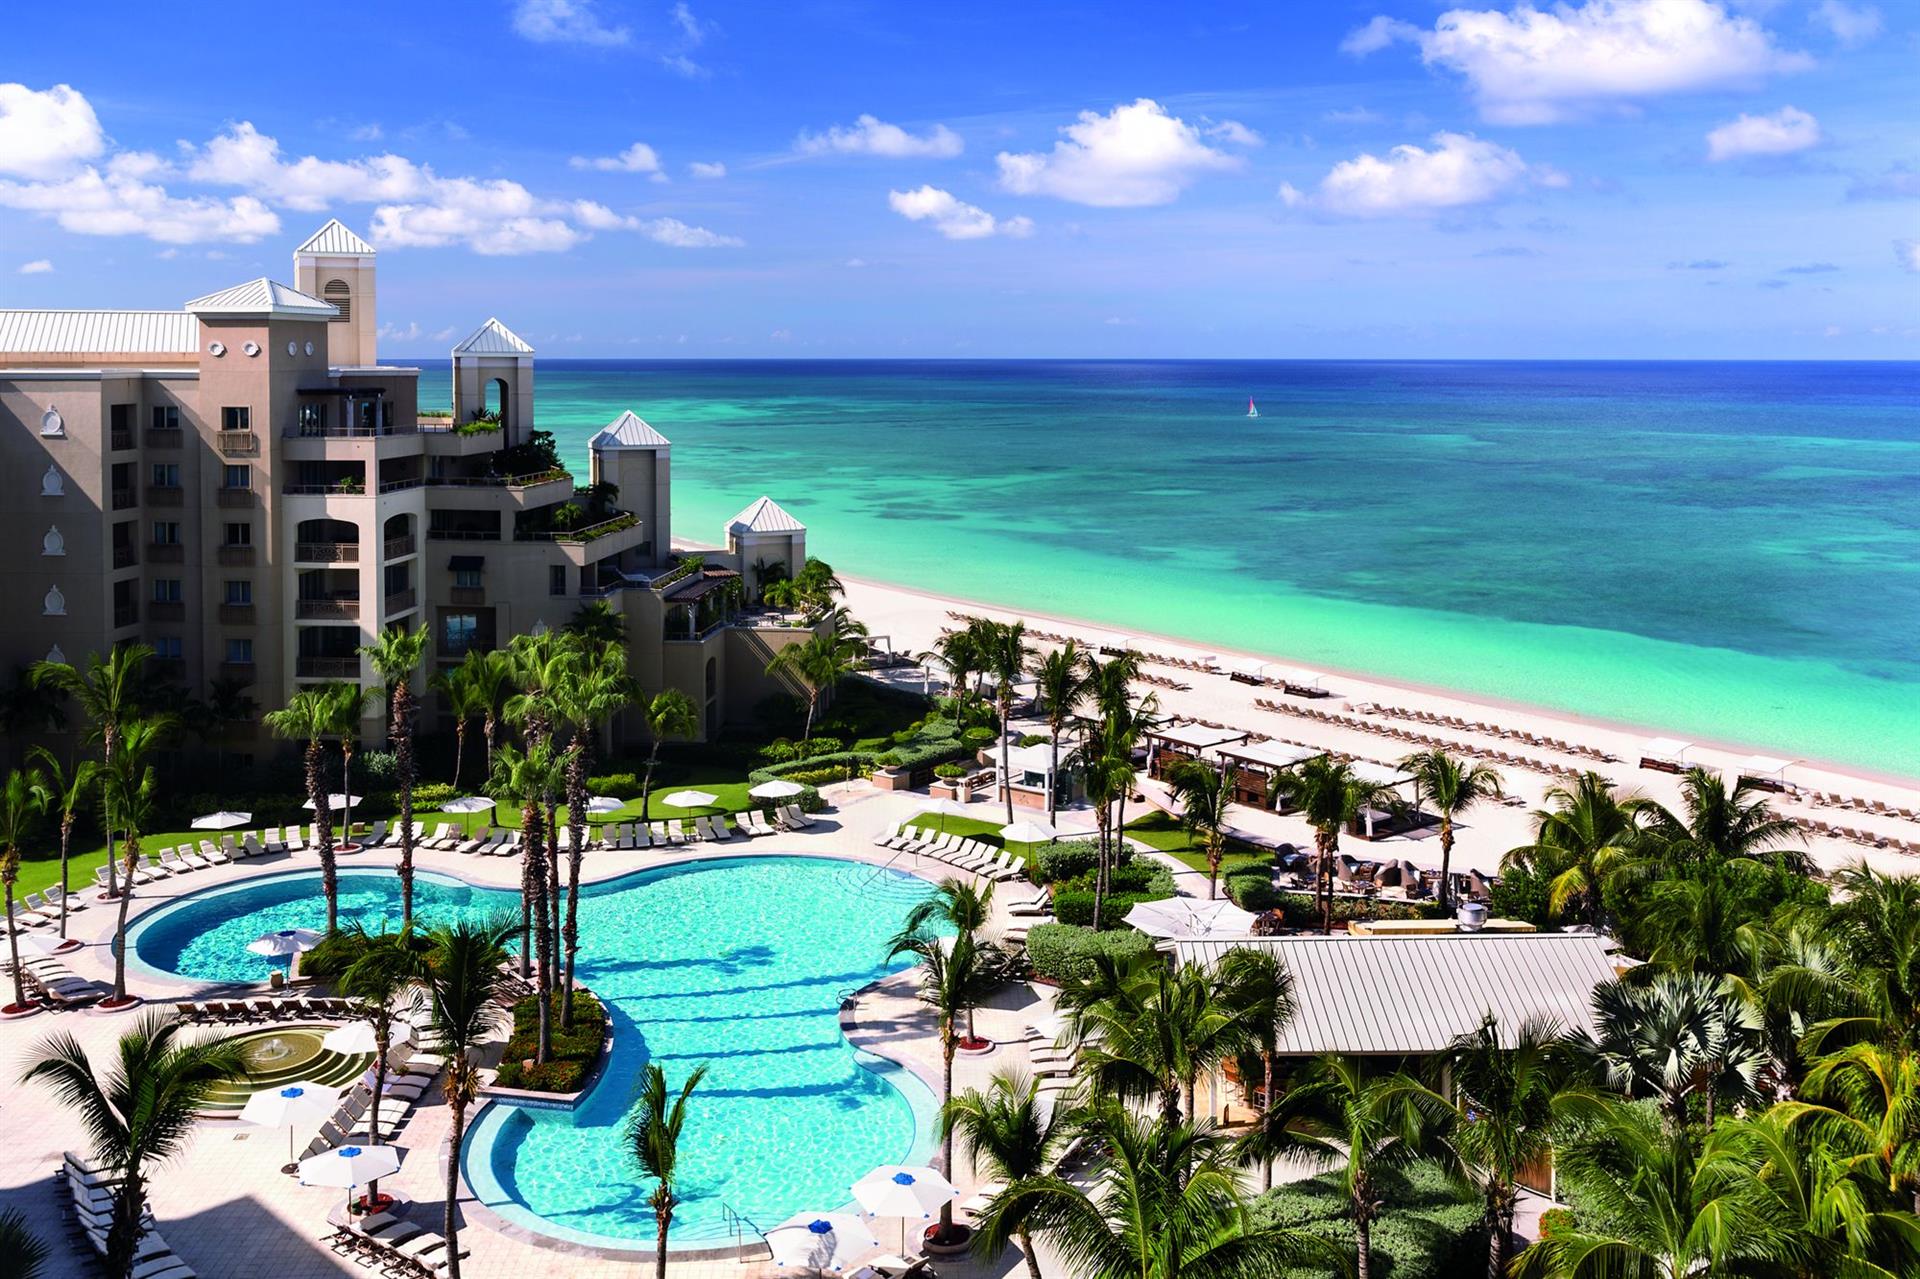 Cayman Islands Real Estate Market Still Heating Up | Grand Cayman